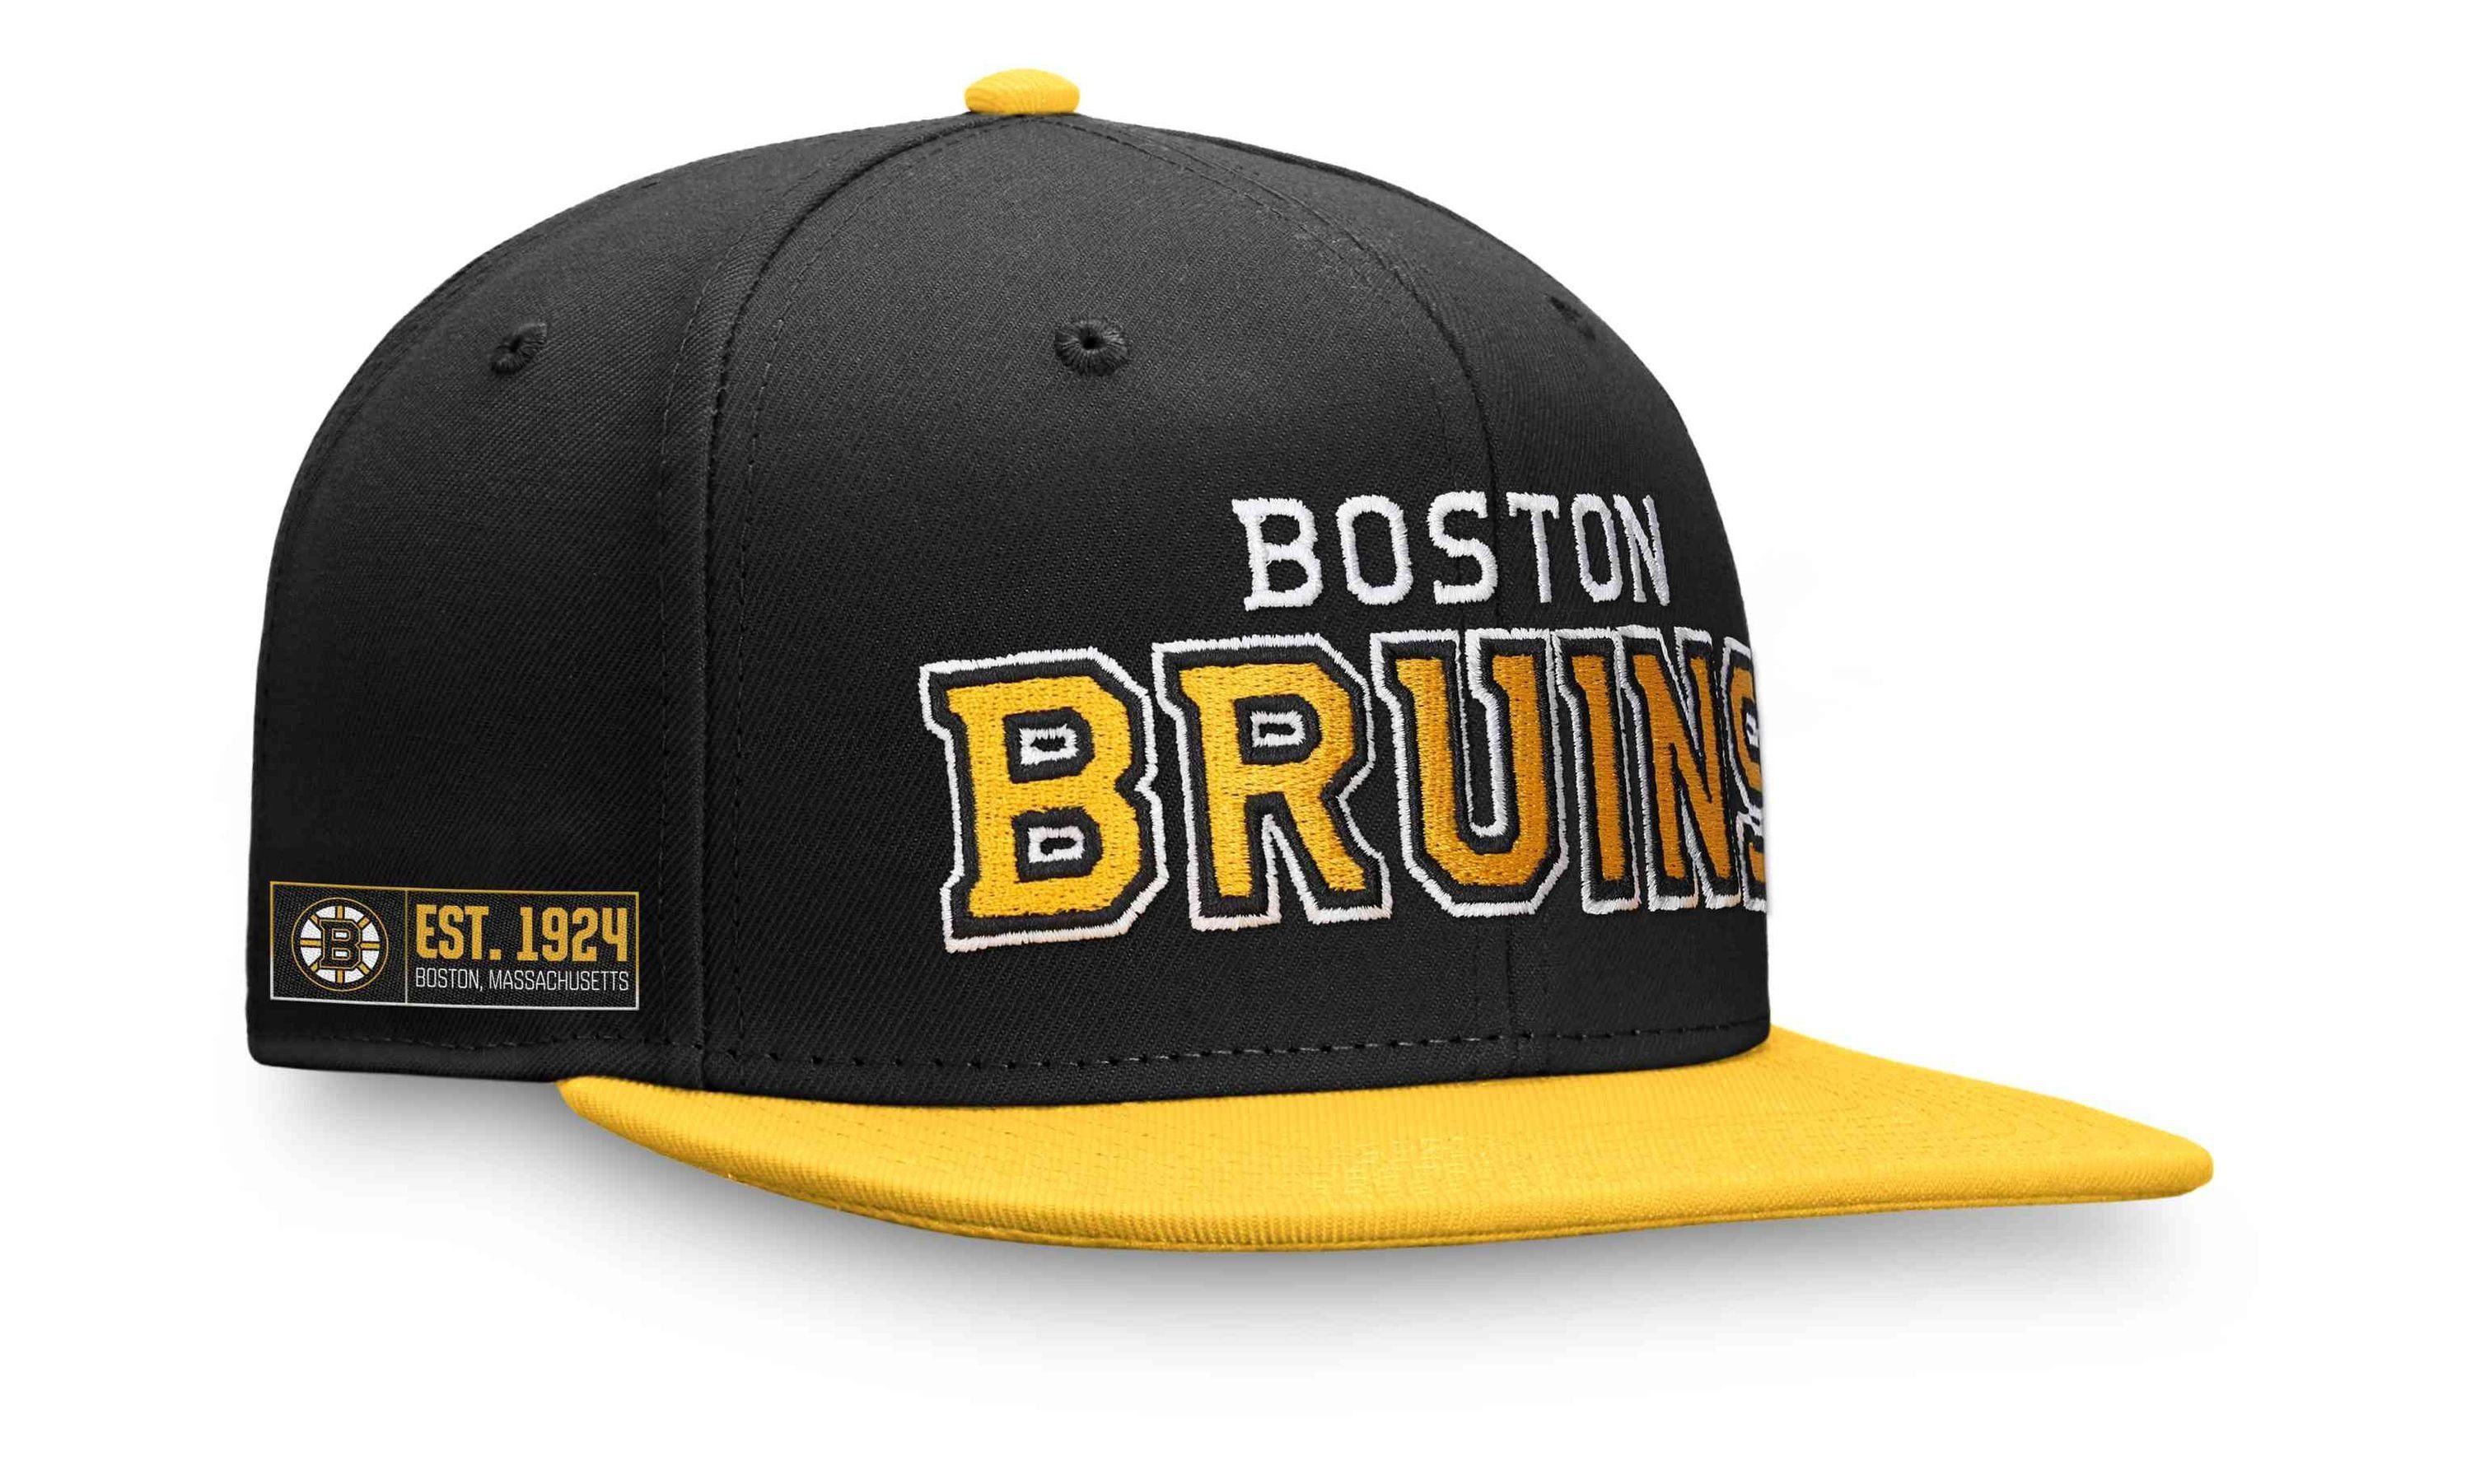 Snapback Color NHL Fanatics Bruins Boston Iconic Cap Blocked